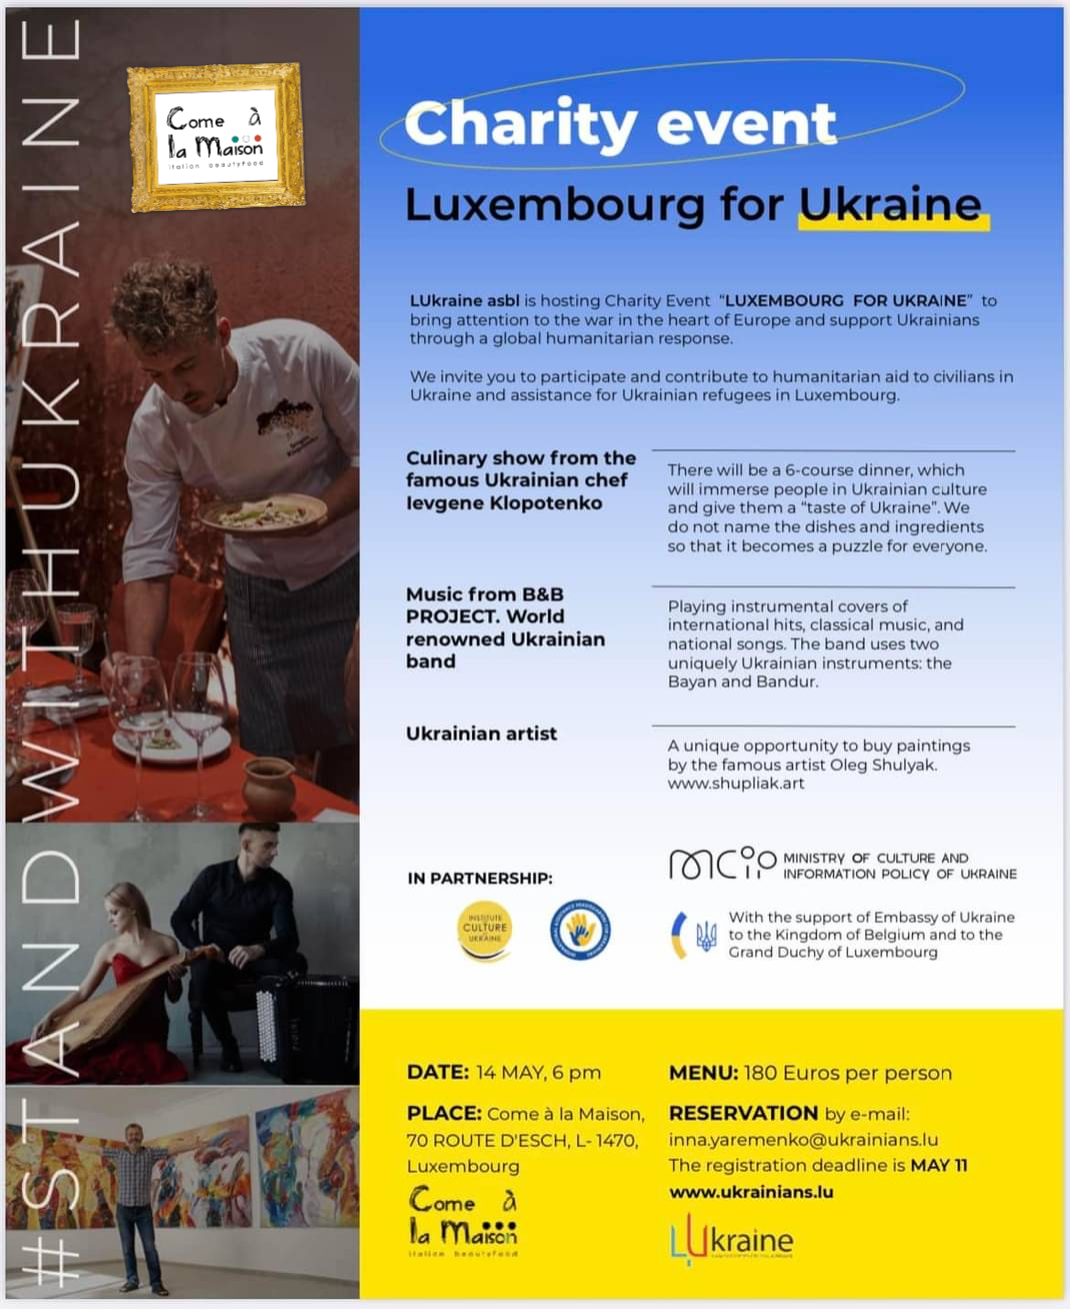 « Luxembourg for Ukraine »